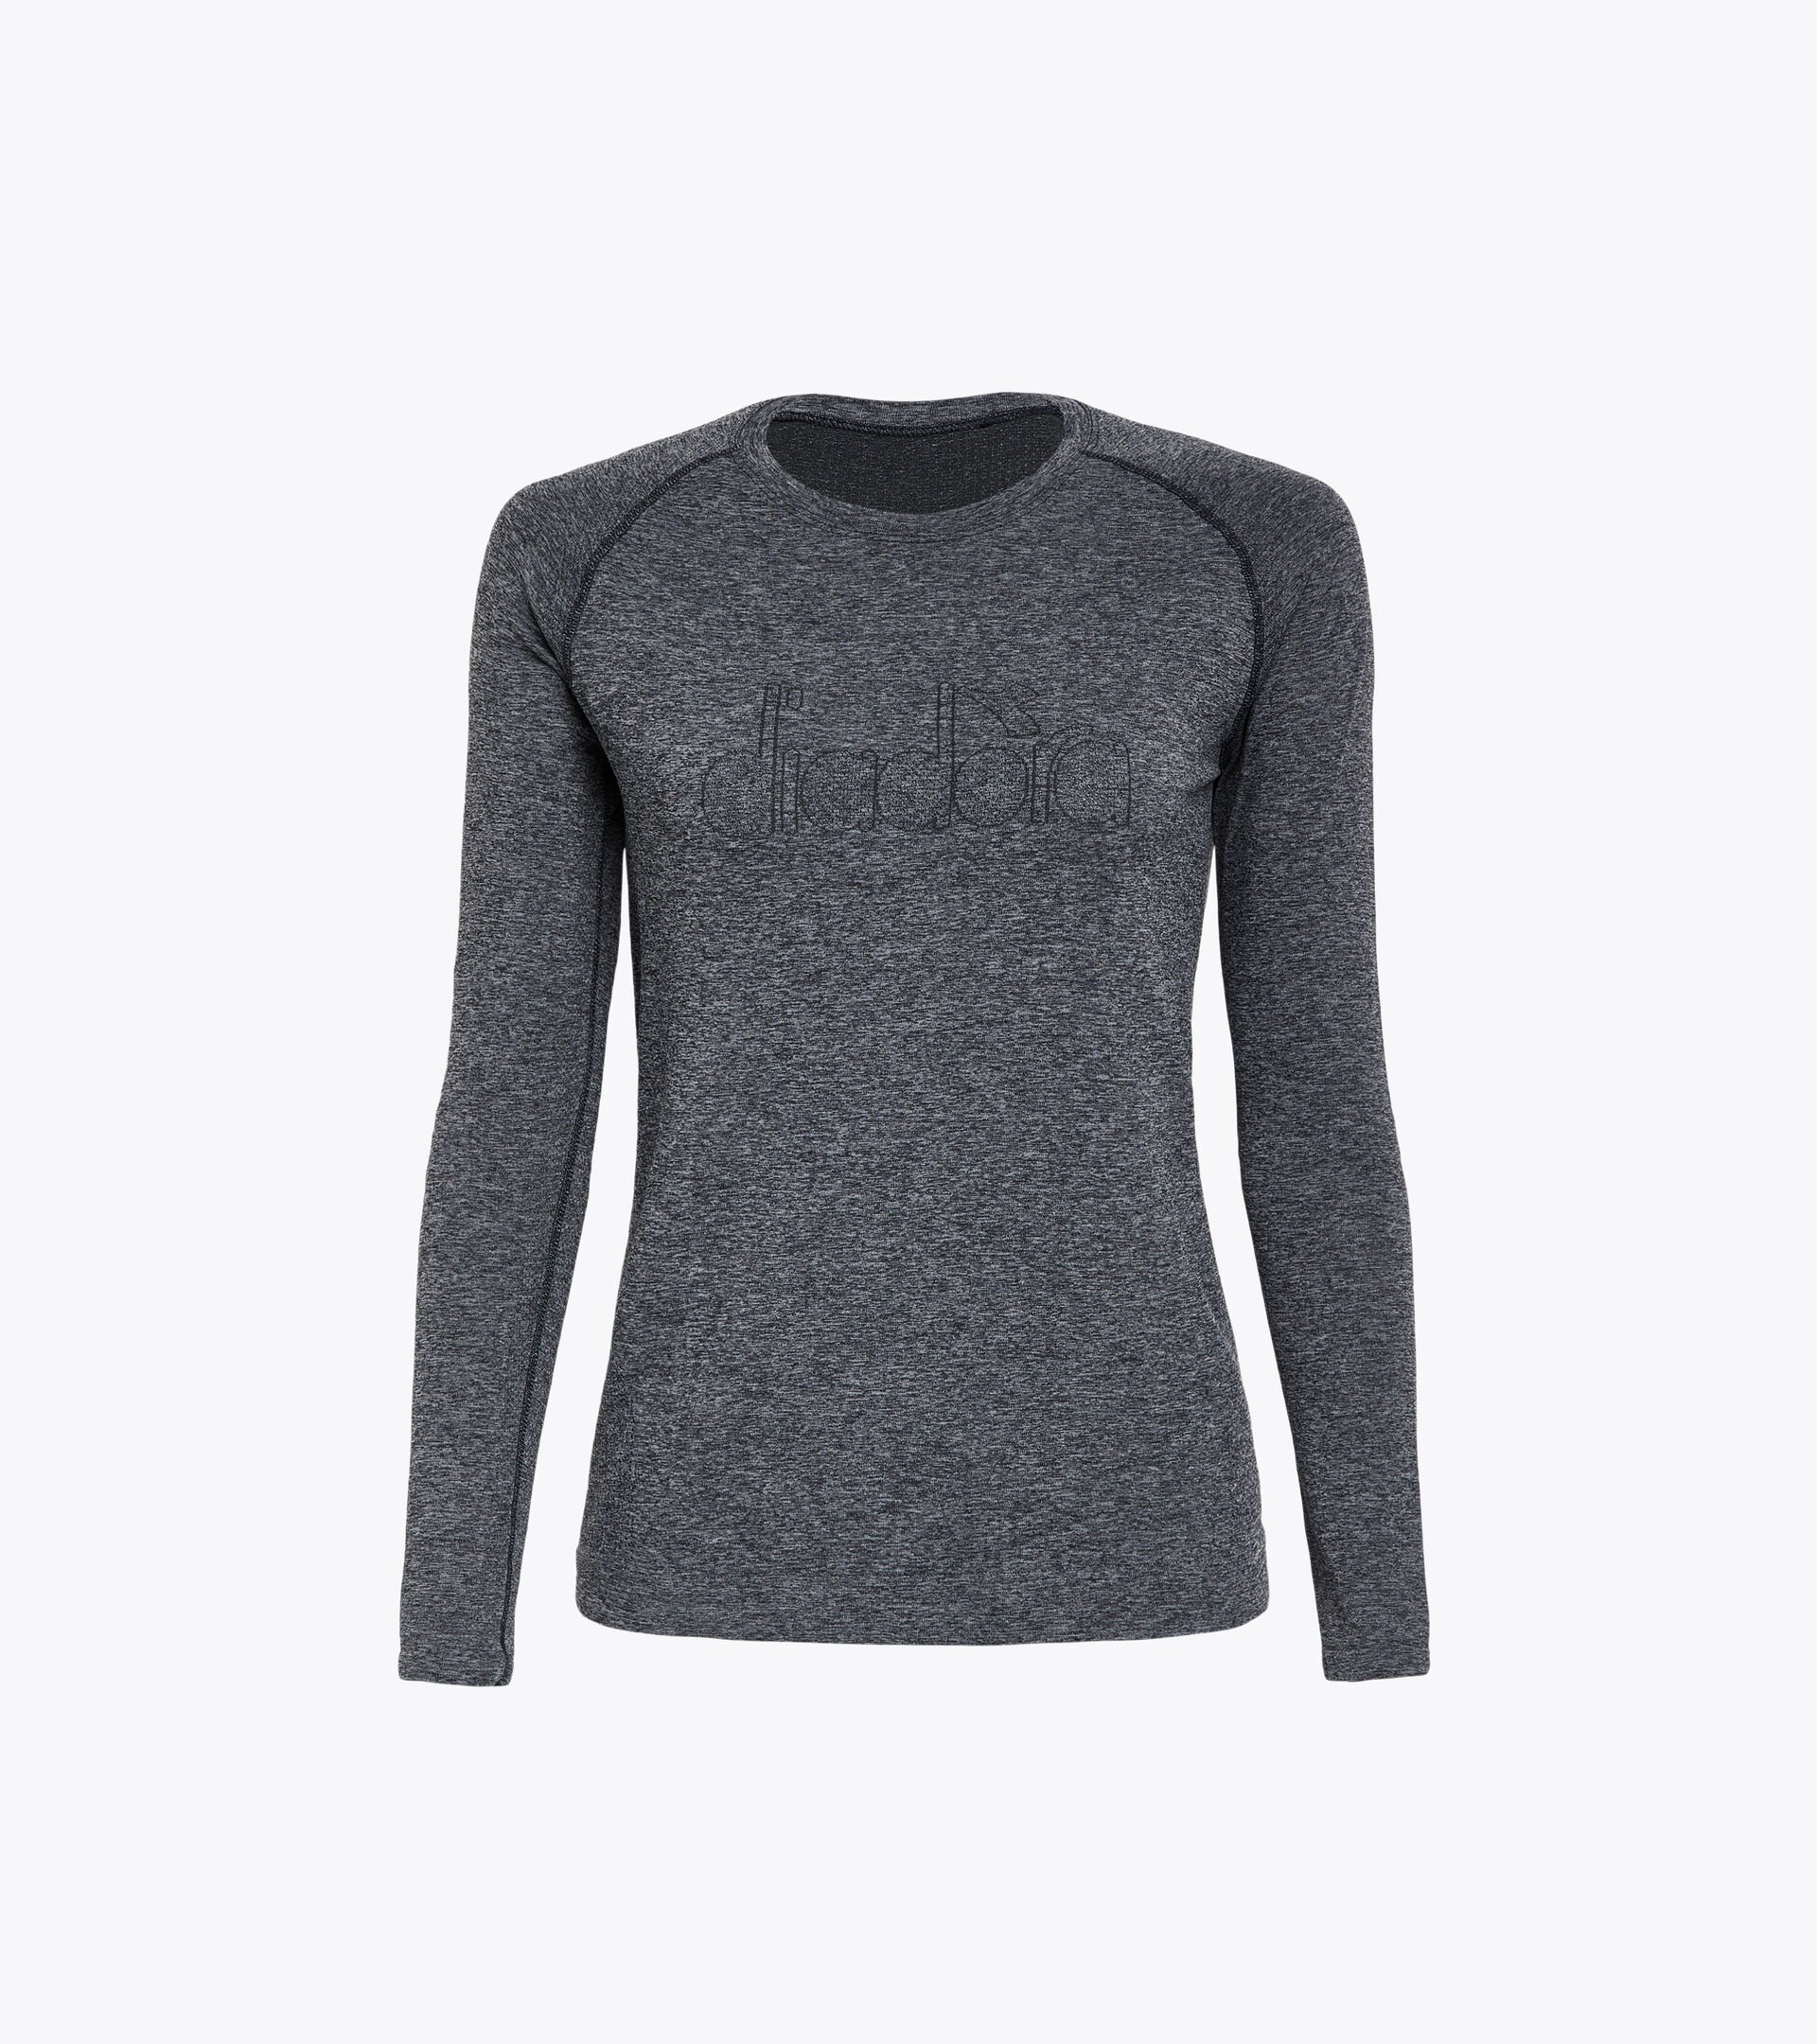 L. LS T-SHIRT SKIN FRIENDLY Long-sleeved thermal shirt - Women - Diadora  Online Store US